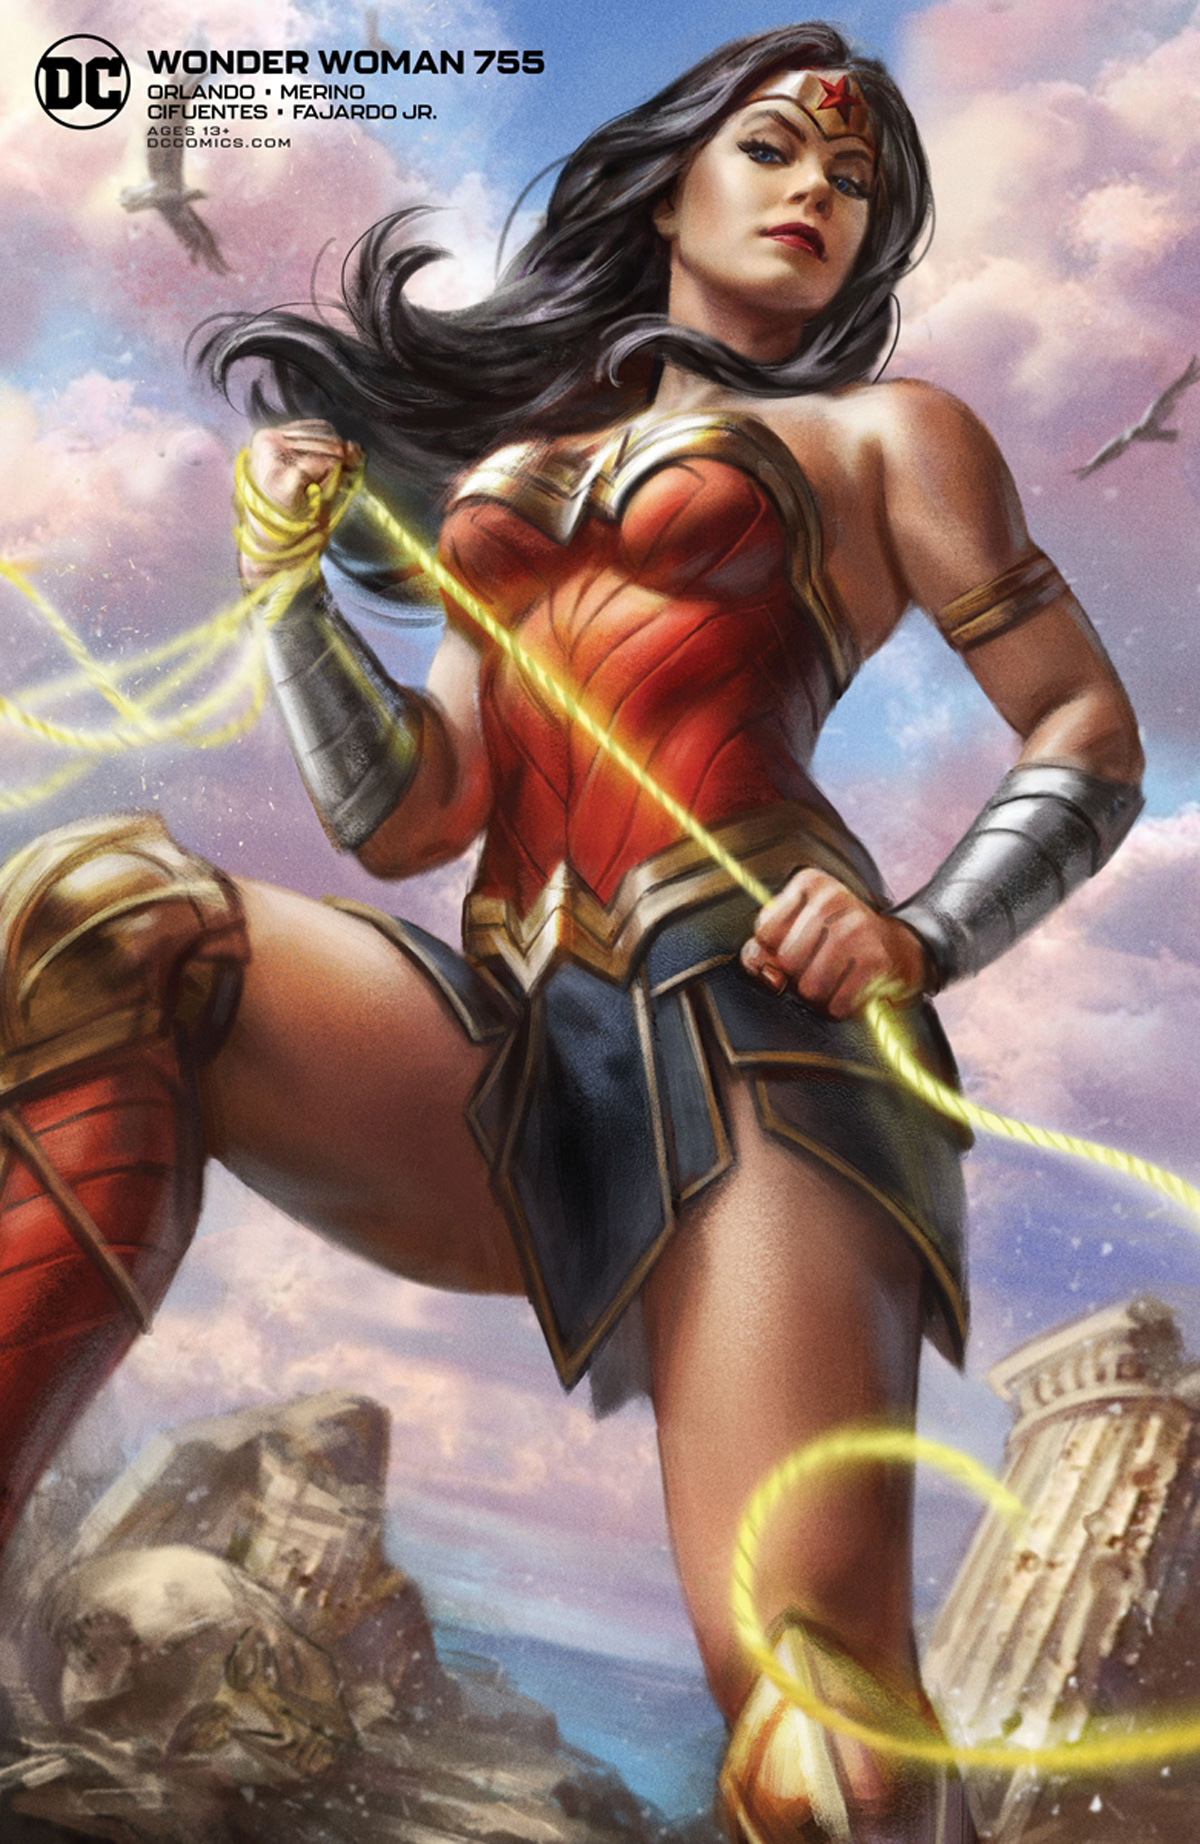 Wonder Woman Vol 5 #755 Cover B Variant Ian MacDonald Cover